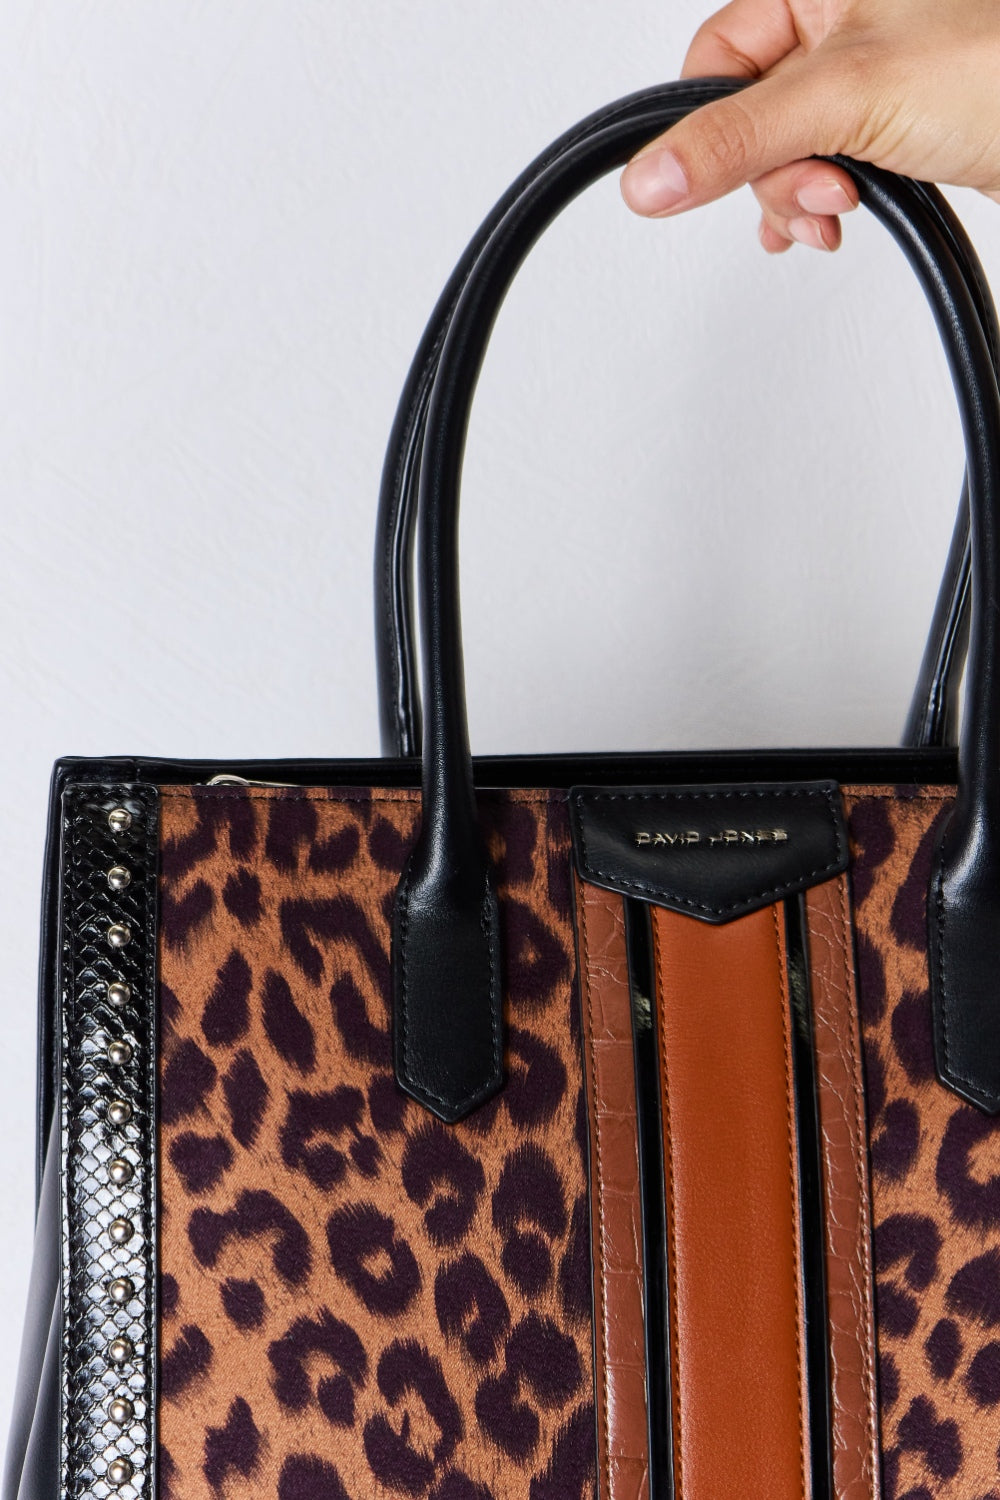 Leopard Handbag:  Women's Stylish Purse